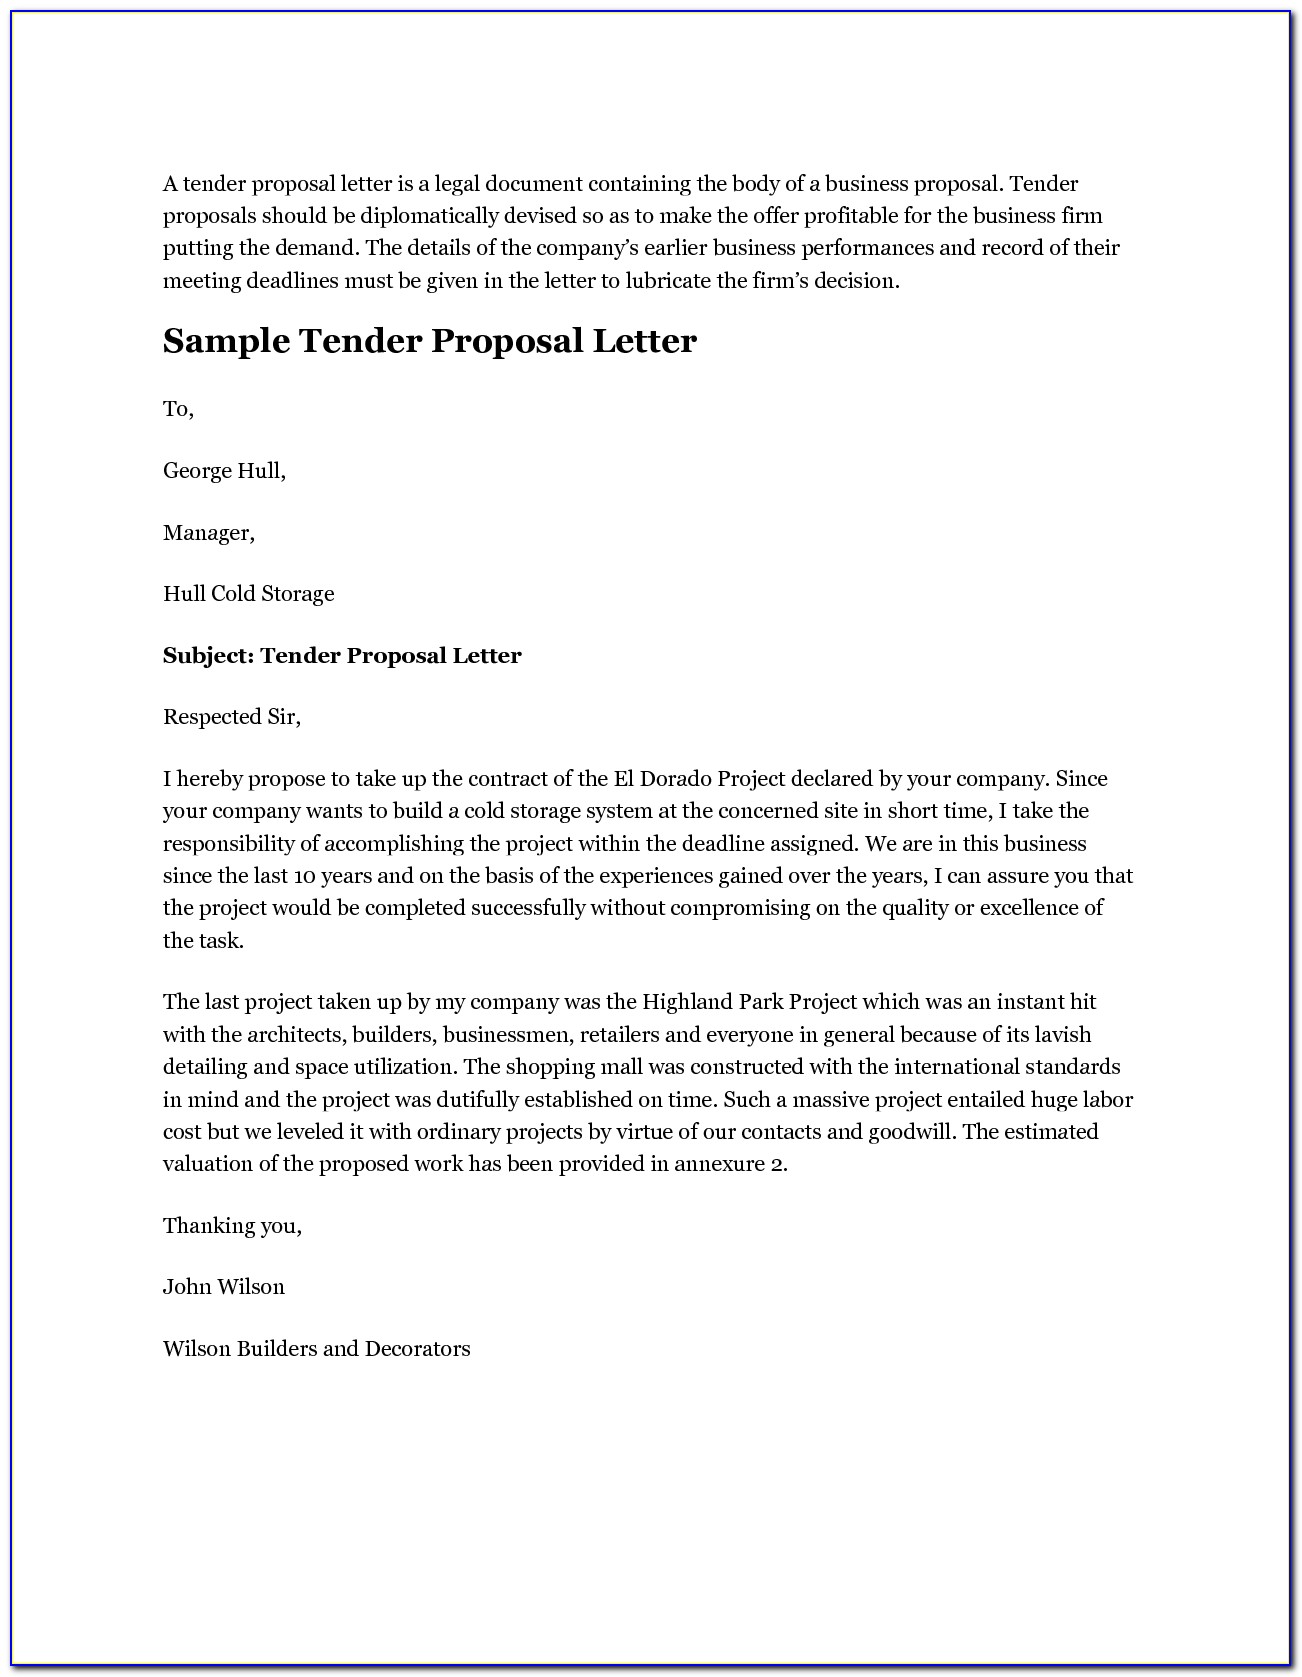 Covering Letter For Tender Proposal